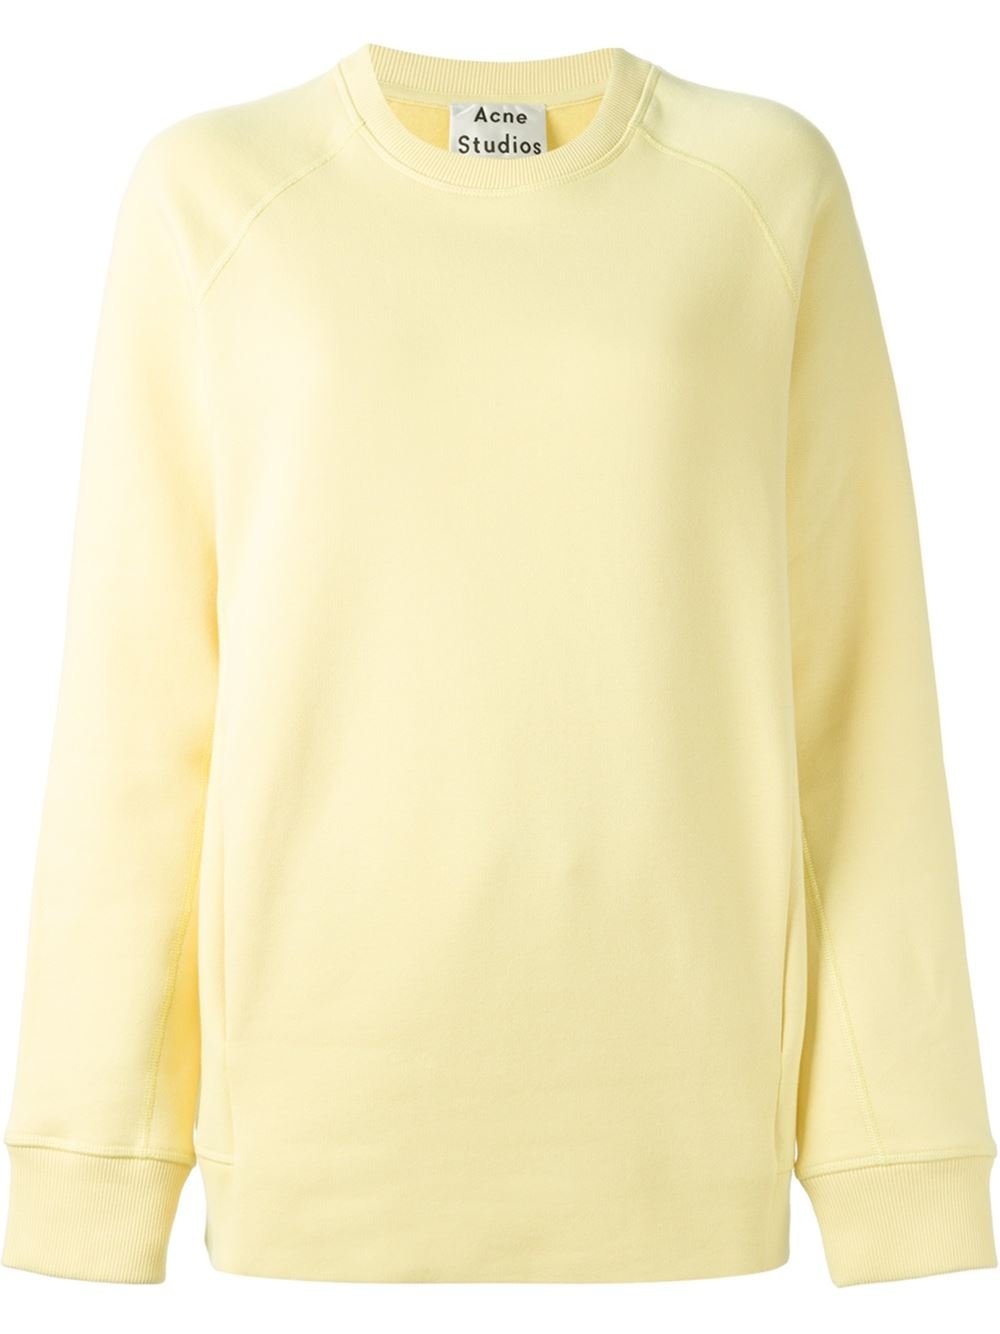 Acne Studios Crew-Neck Cotton-Blend Sweatshirt in Yellow - Lyst